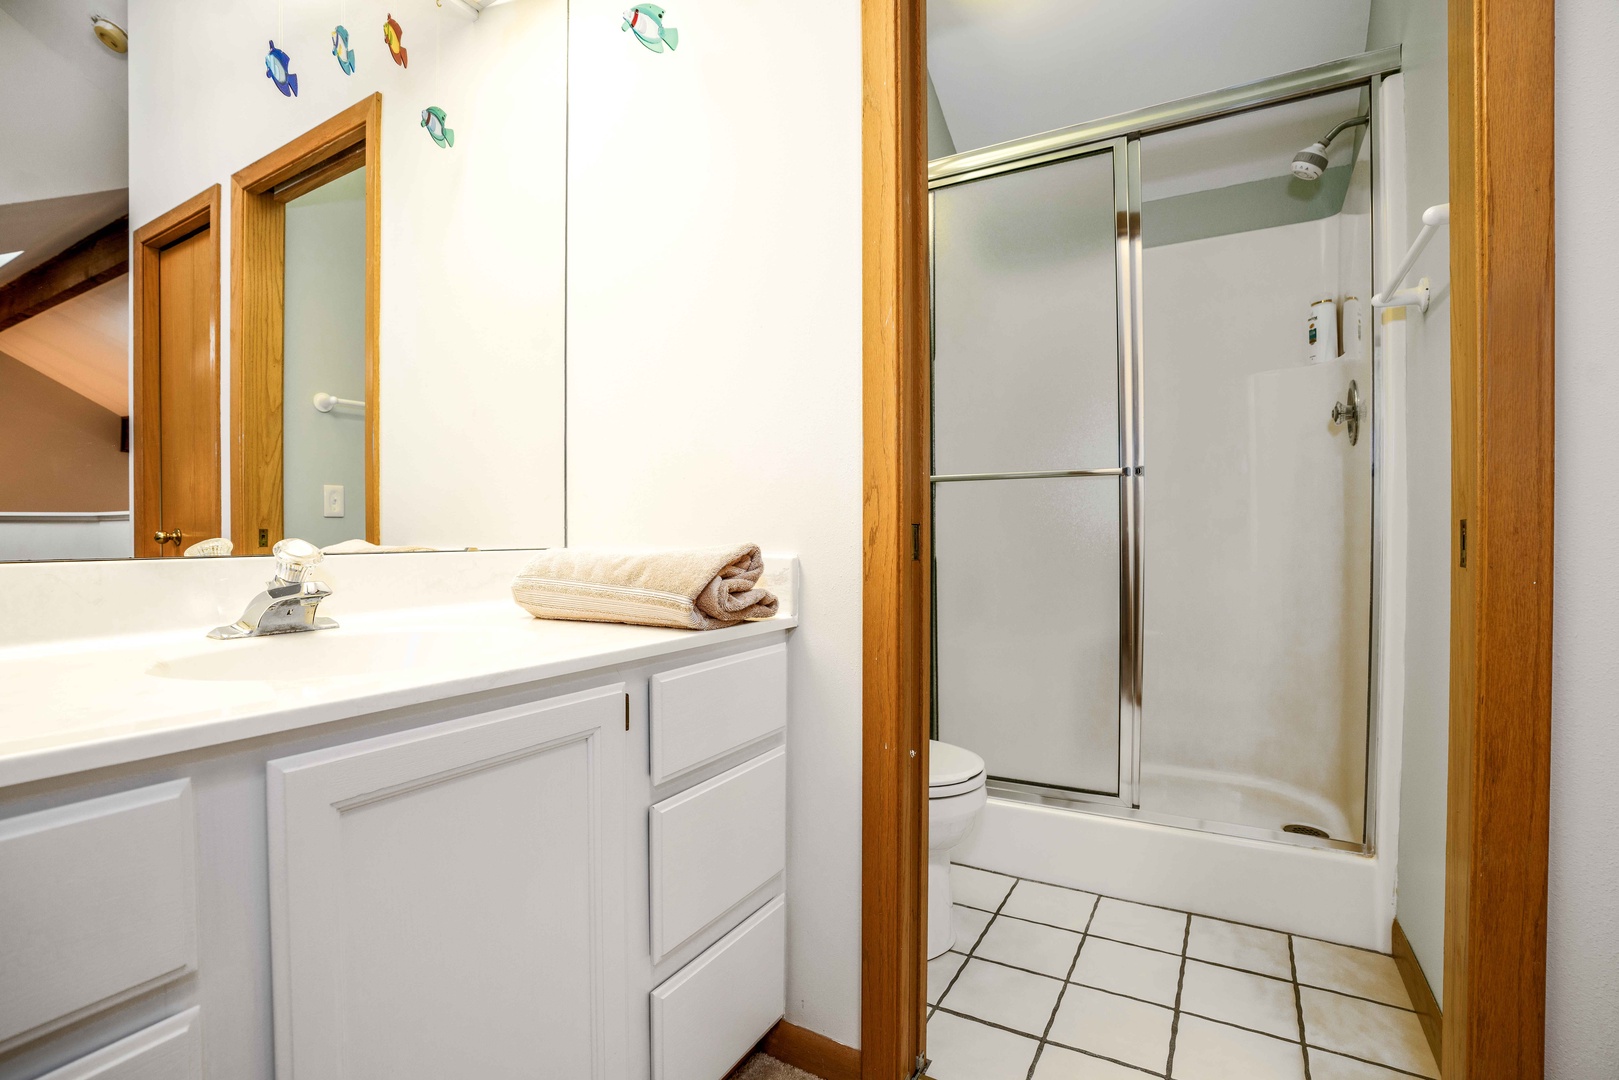 This full bathroom includes a single vanity sink & walk-in shower